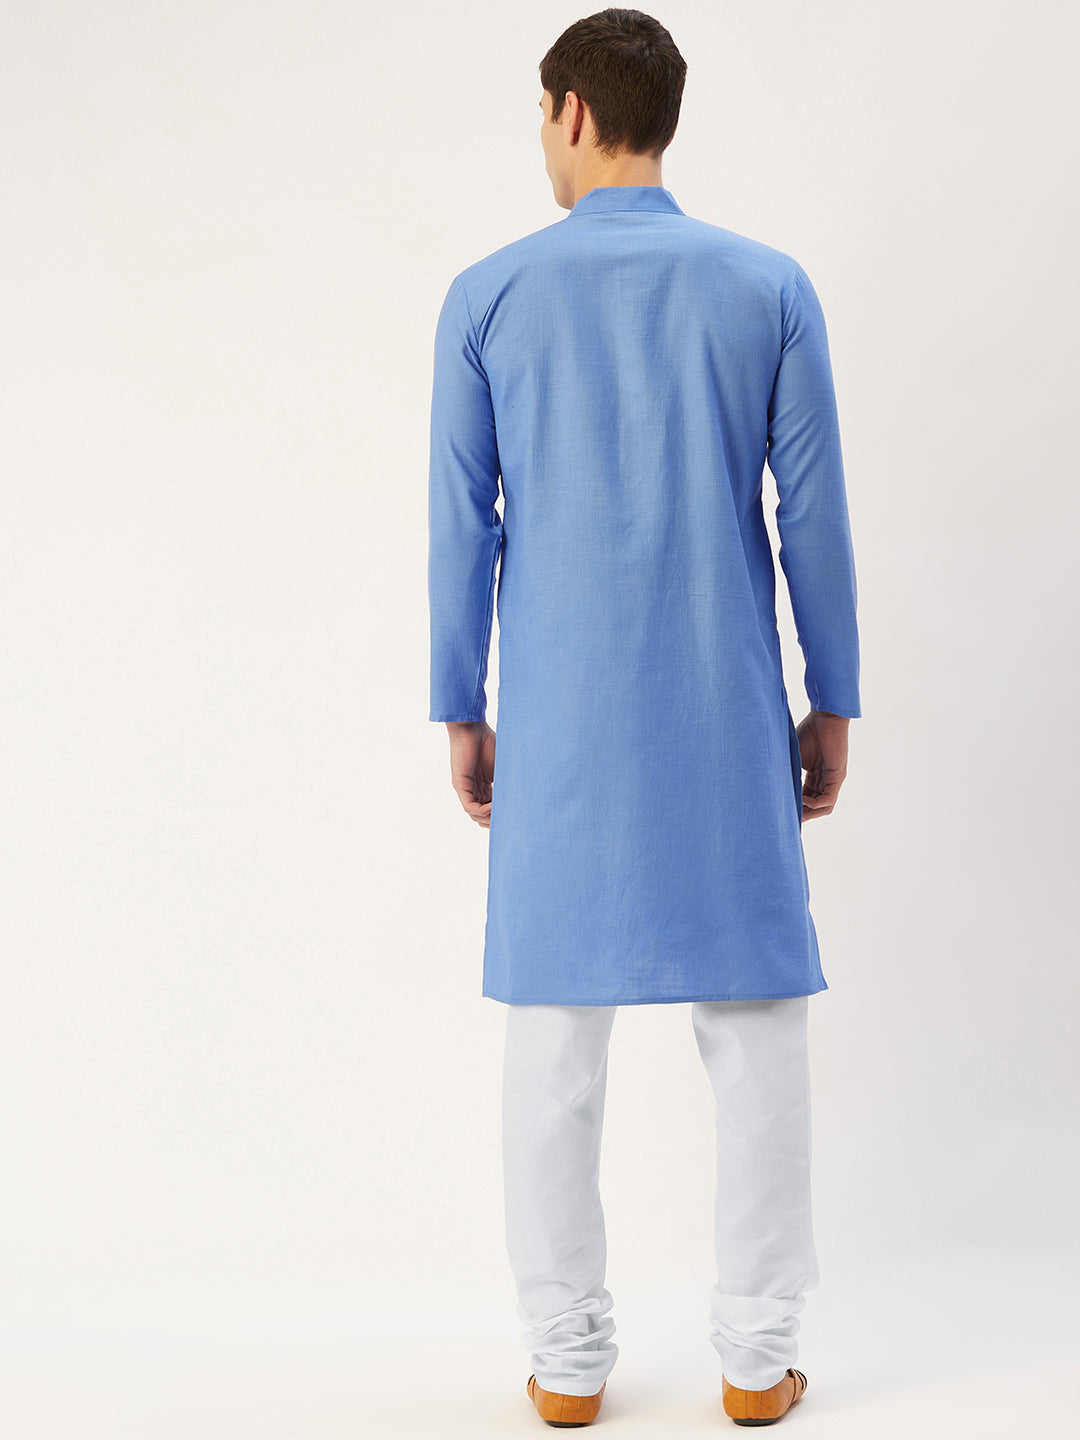 Jompers Men's Blue Cotton Solid Kurta Pyjama